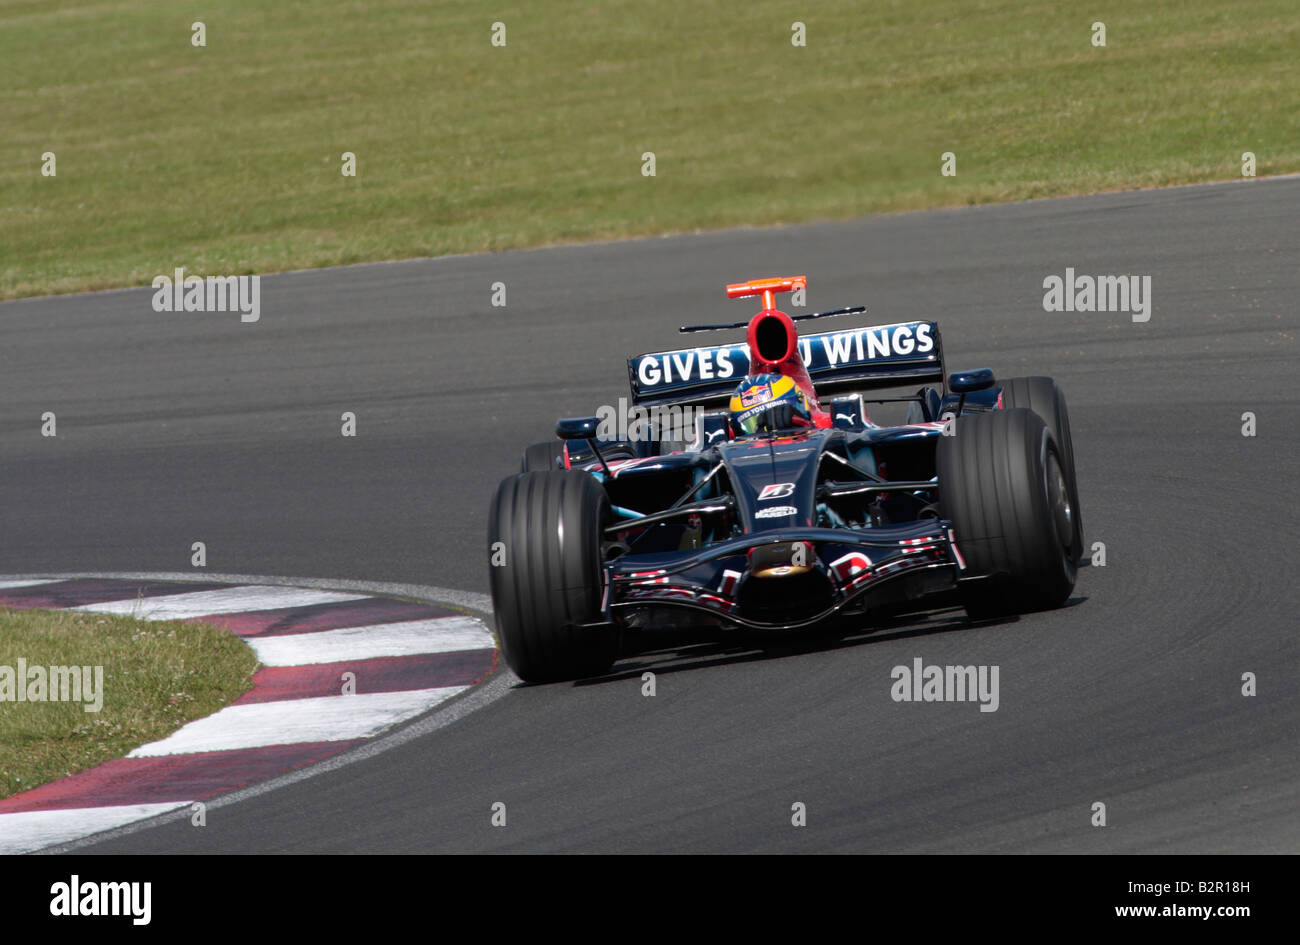 Sebastien Bourdais in the Toro Rosso STR 3  f1 racing car at Silverstone tyre test 2008 Stock Photo